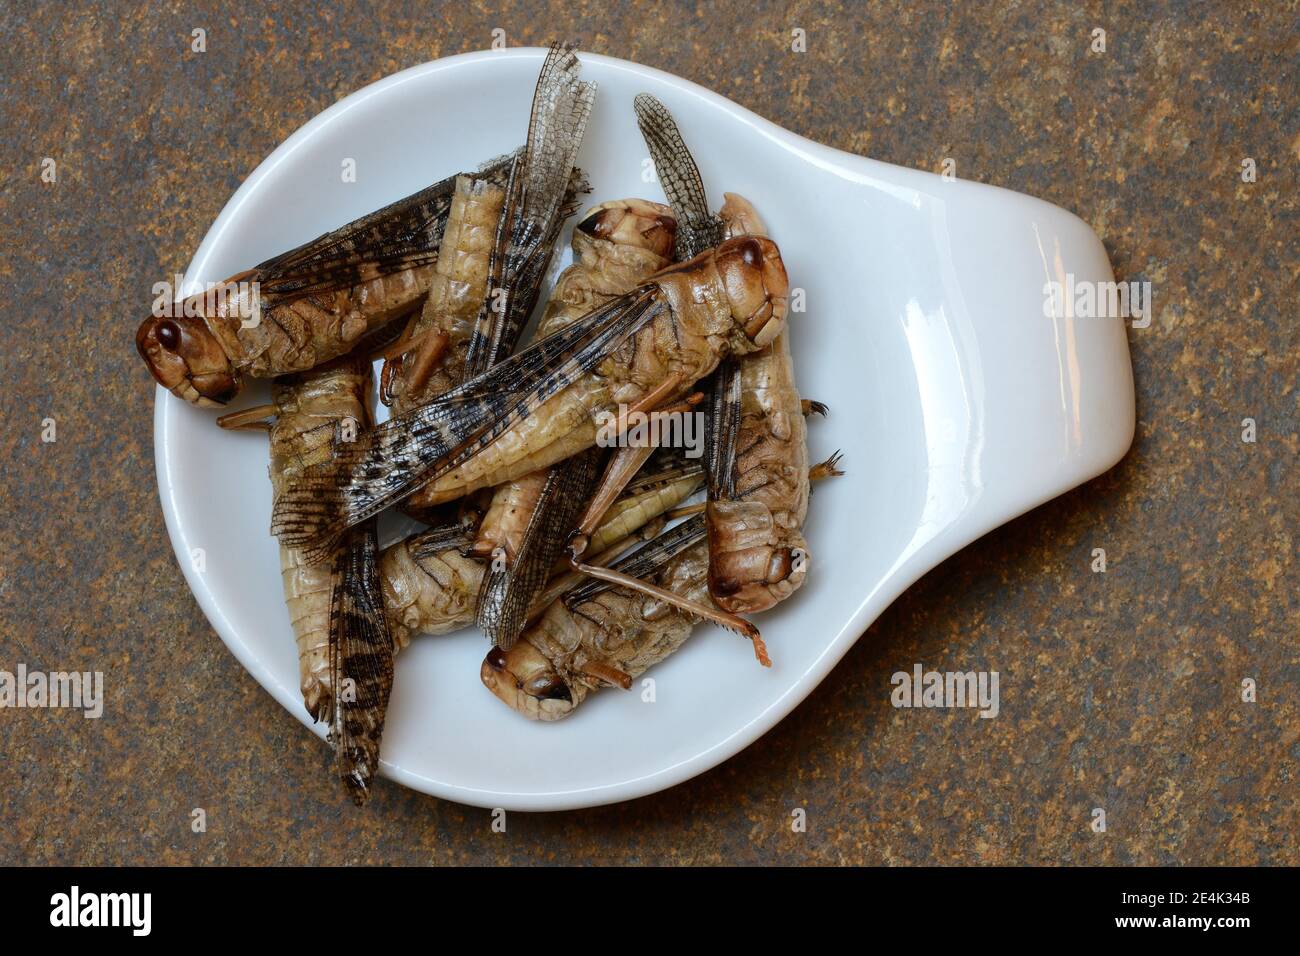 https://c8.alamy.com/comp/2E4K34B/dried-locusts-in-shell-european-locust-locusta-migratoria-2E4K34B.jpg